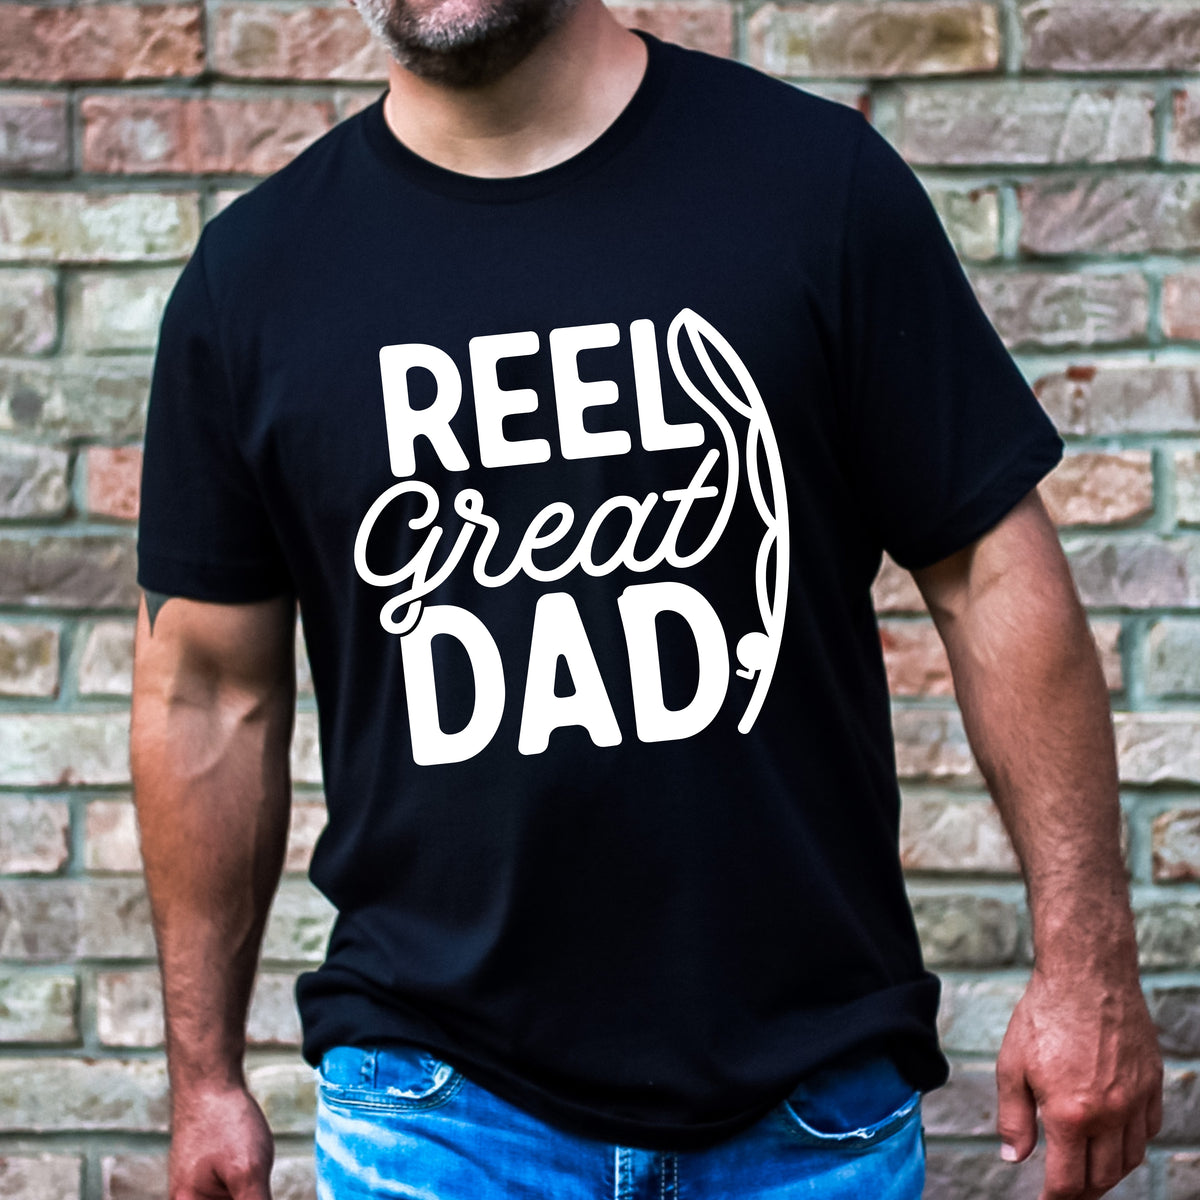 Reel Great Dad T-shirt